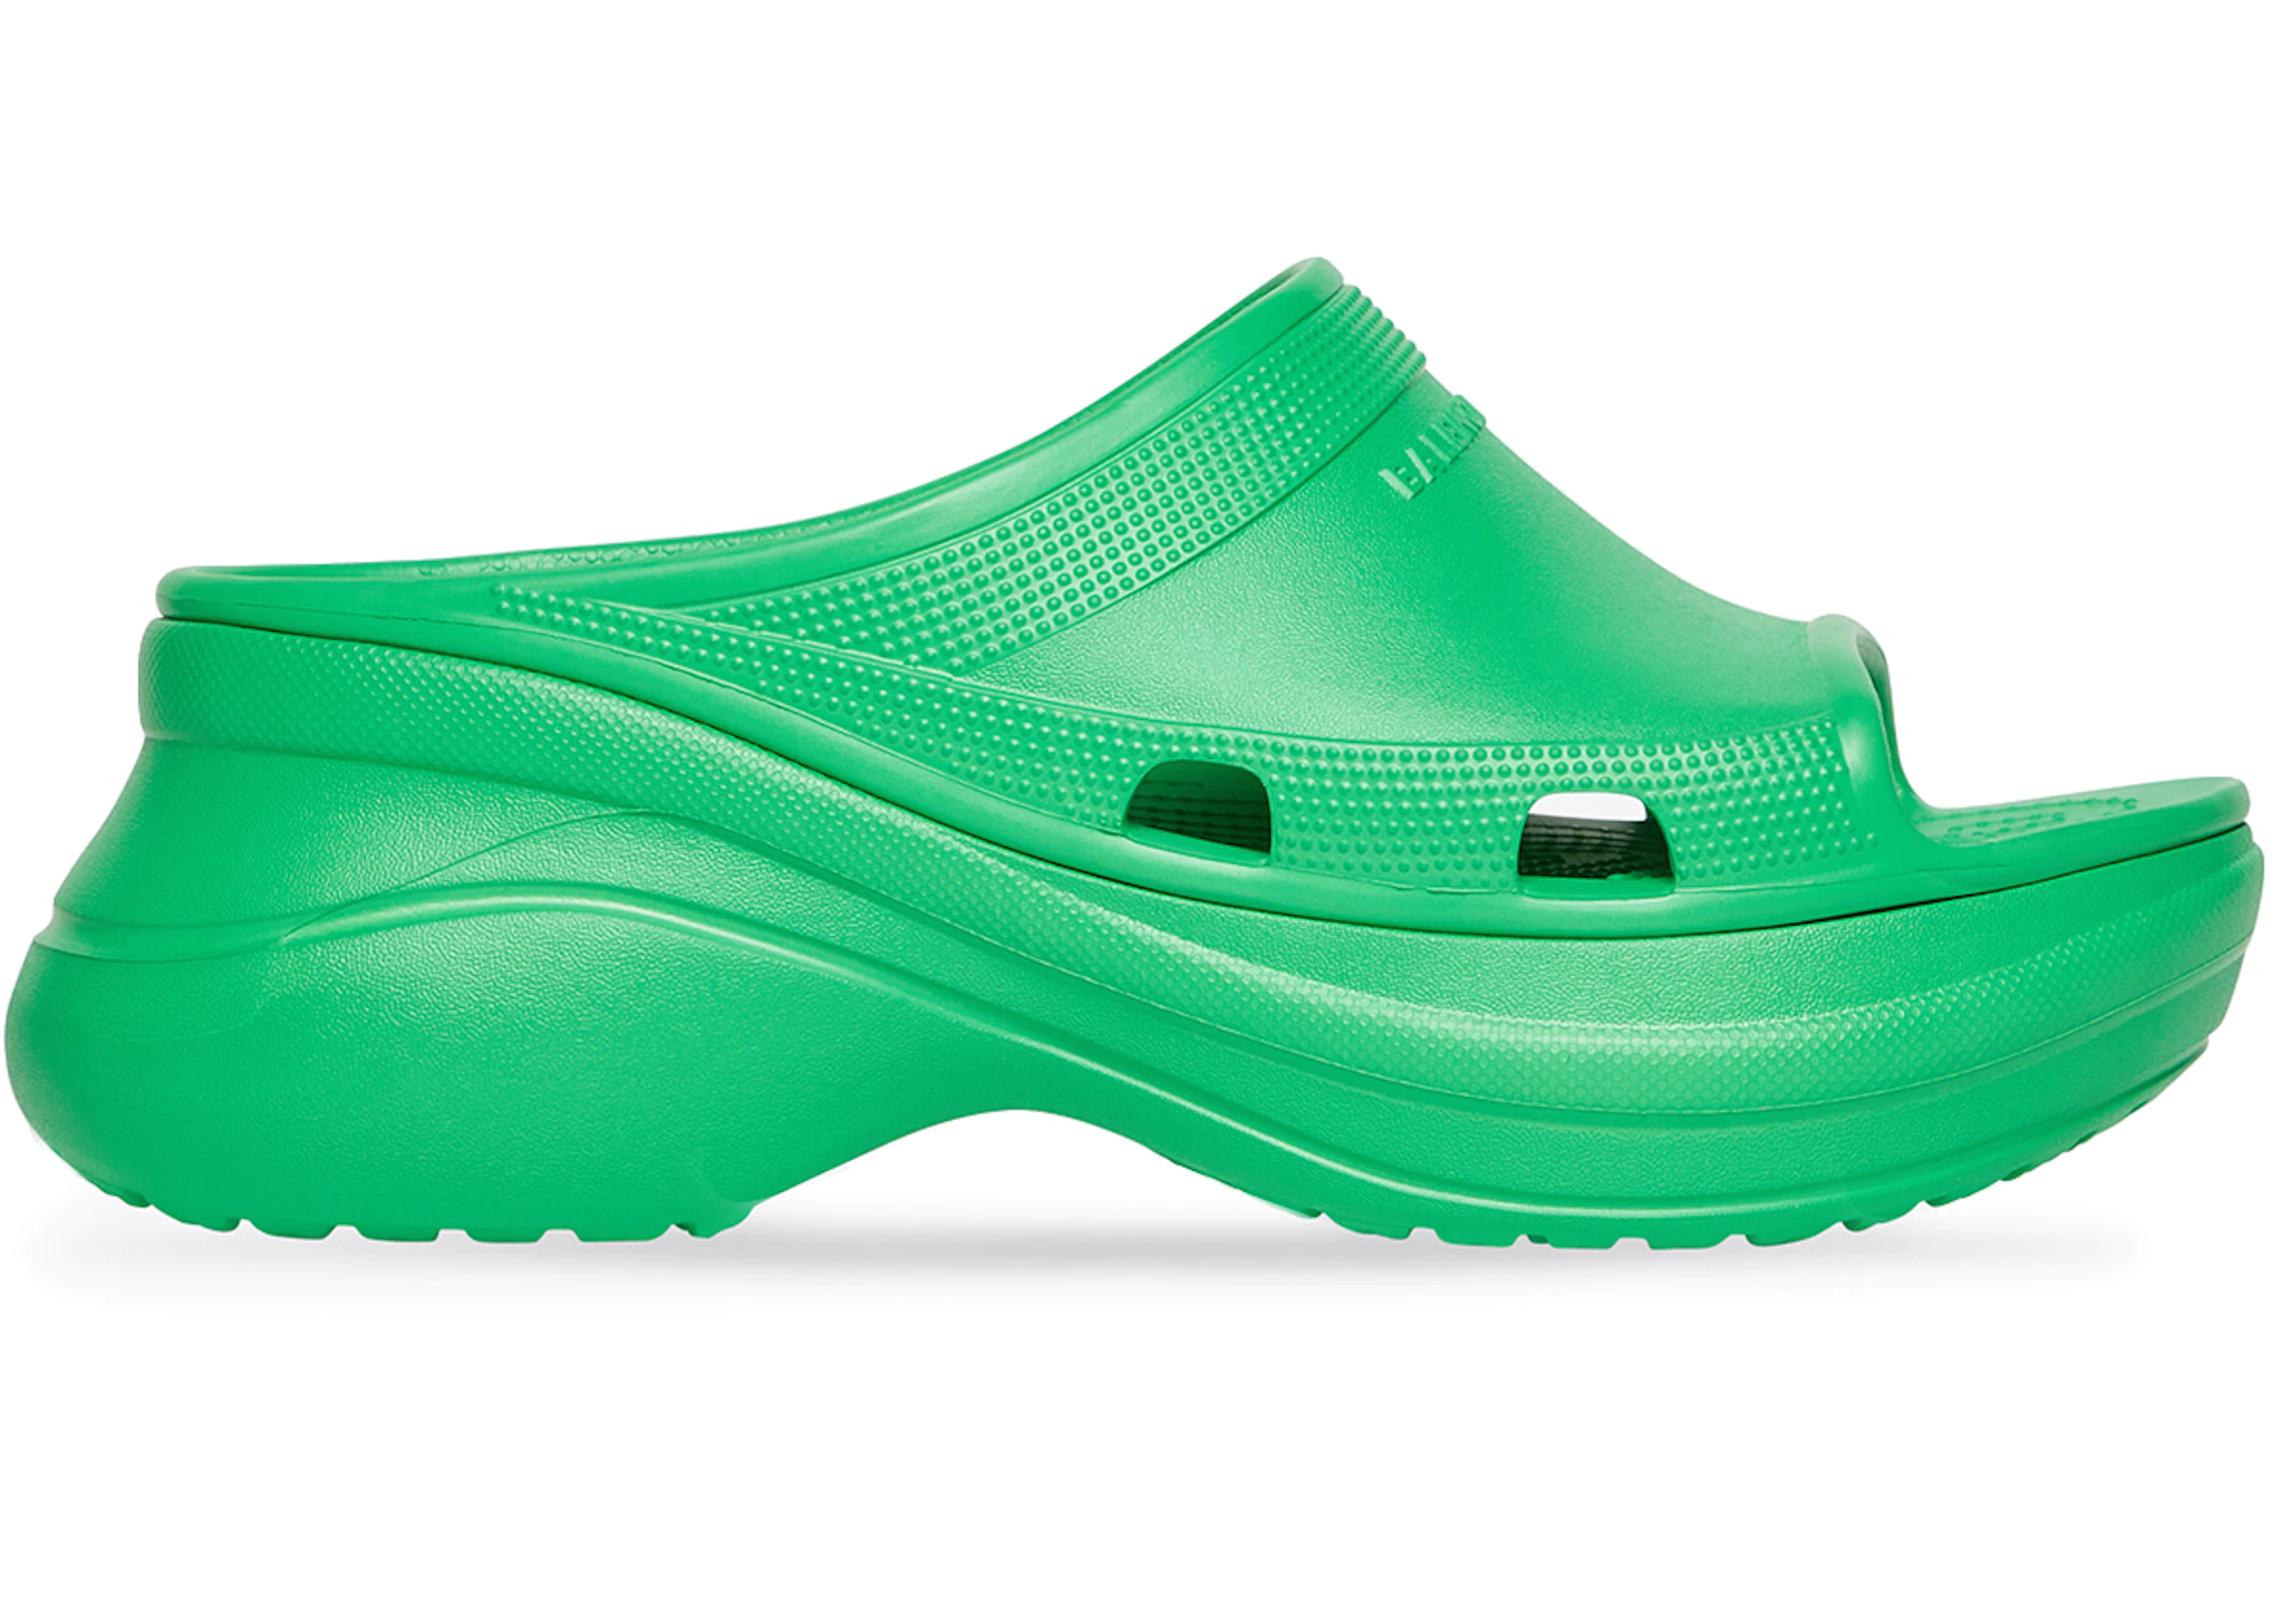 Balenciaga x Crocs Pool Slide Sandals Green - 677386W1S8E3033 - US